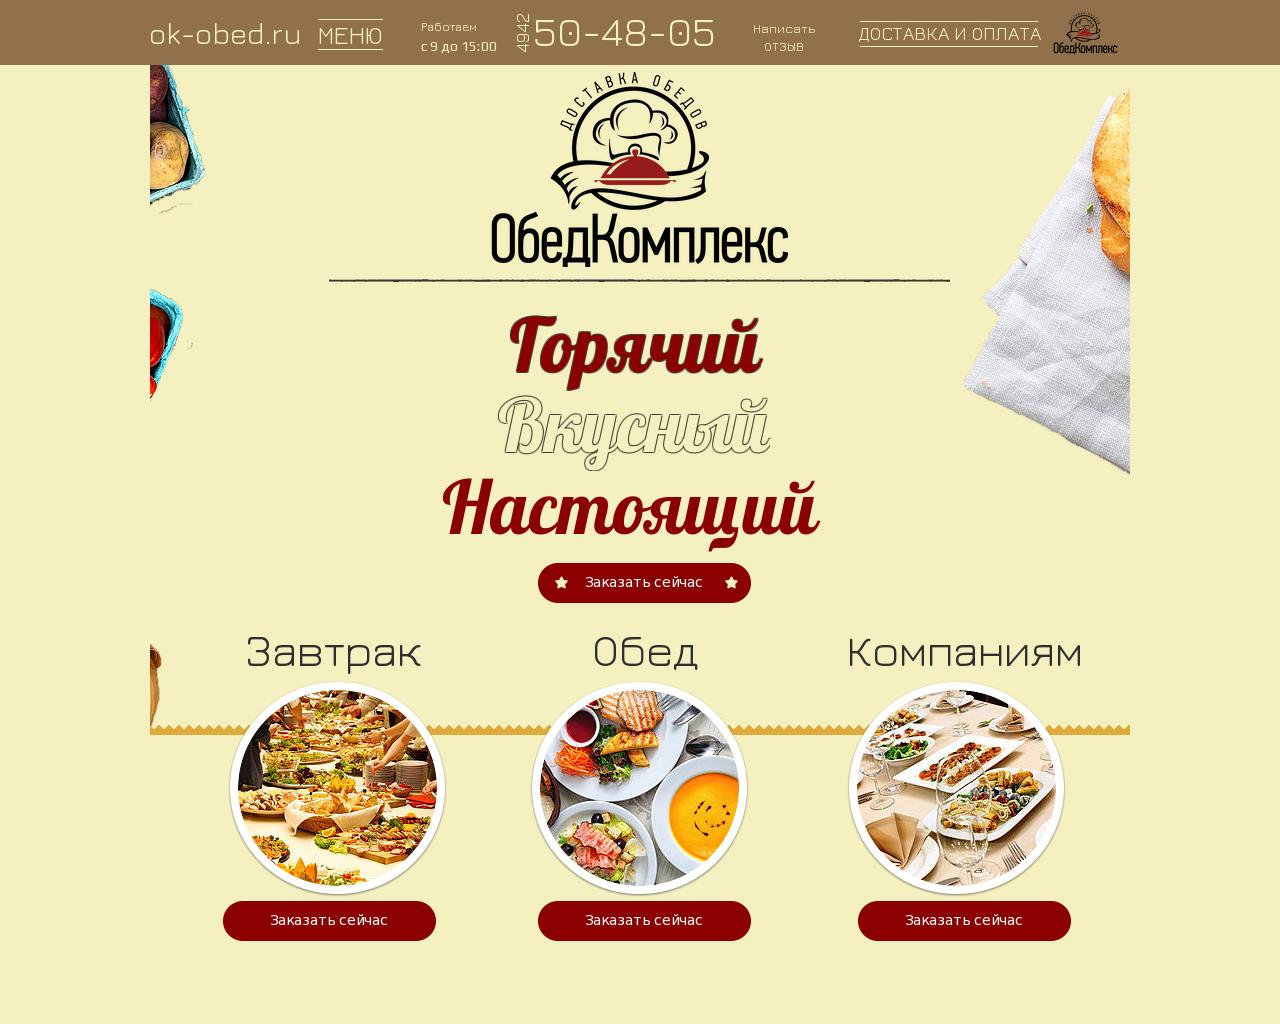 Изображение сайта ok-obed.ru в разрешении 1280x1024